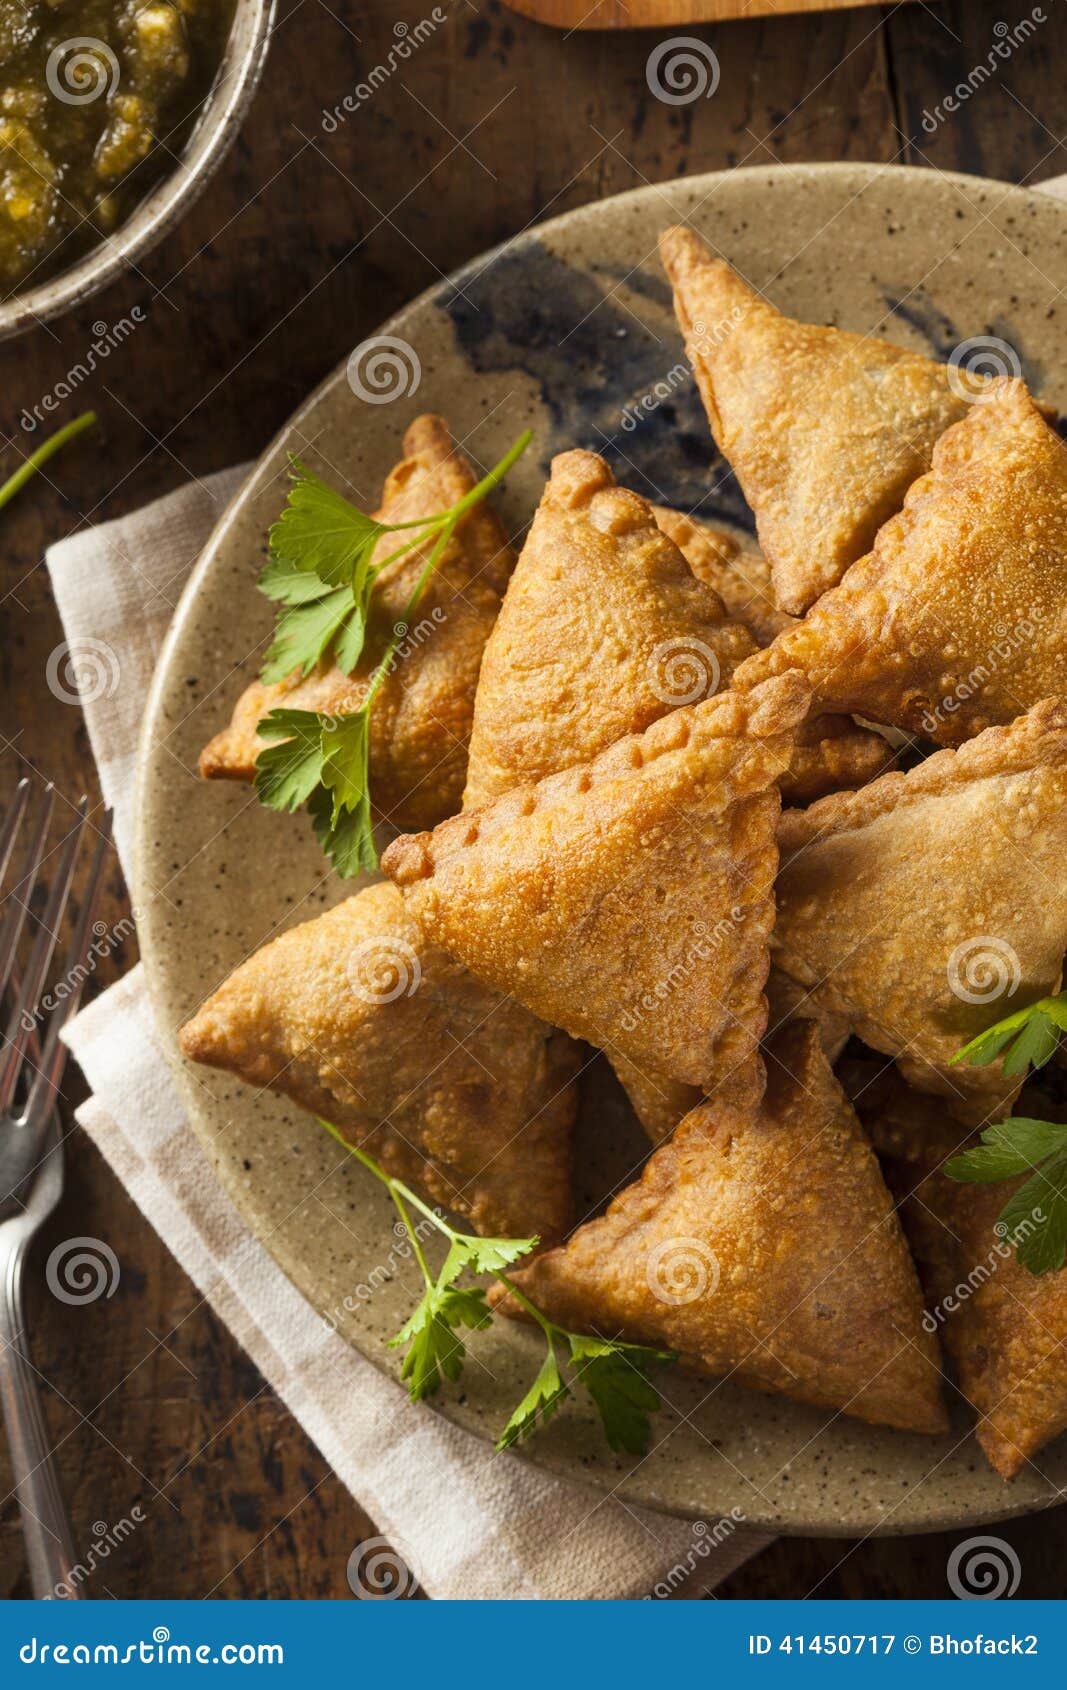 Homemade Fried Indian Samosas Stock Image - Image of junk, crispy: 41450717